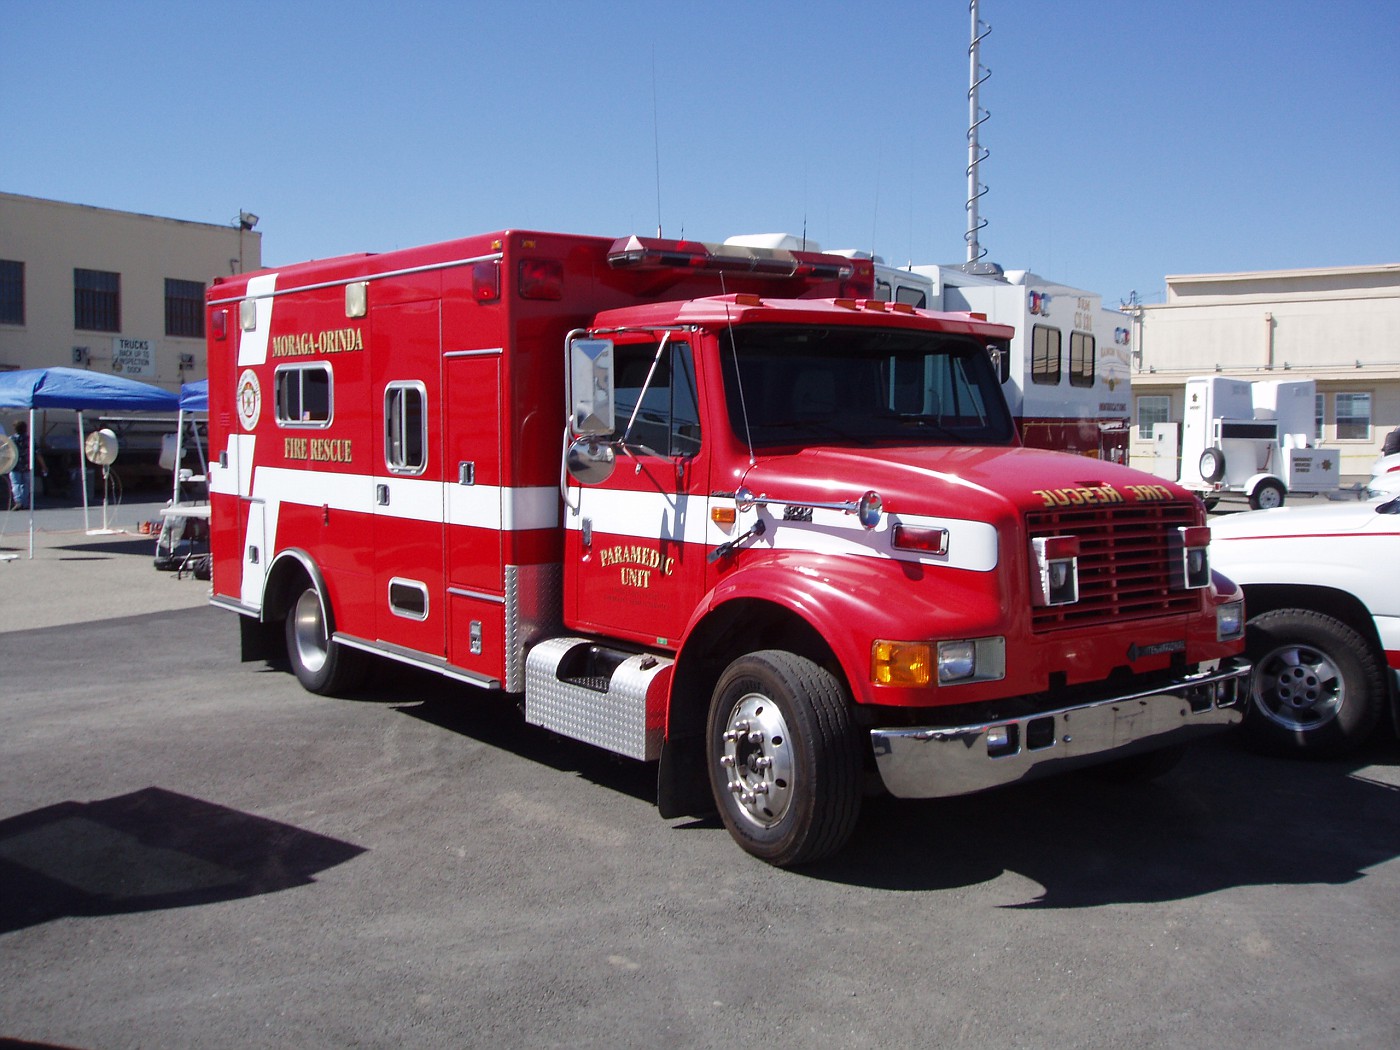 CA - Moraga/Orinda Fire Rescue